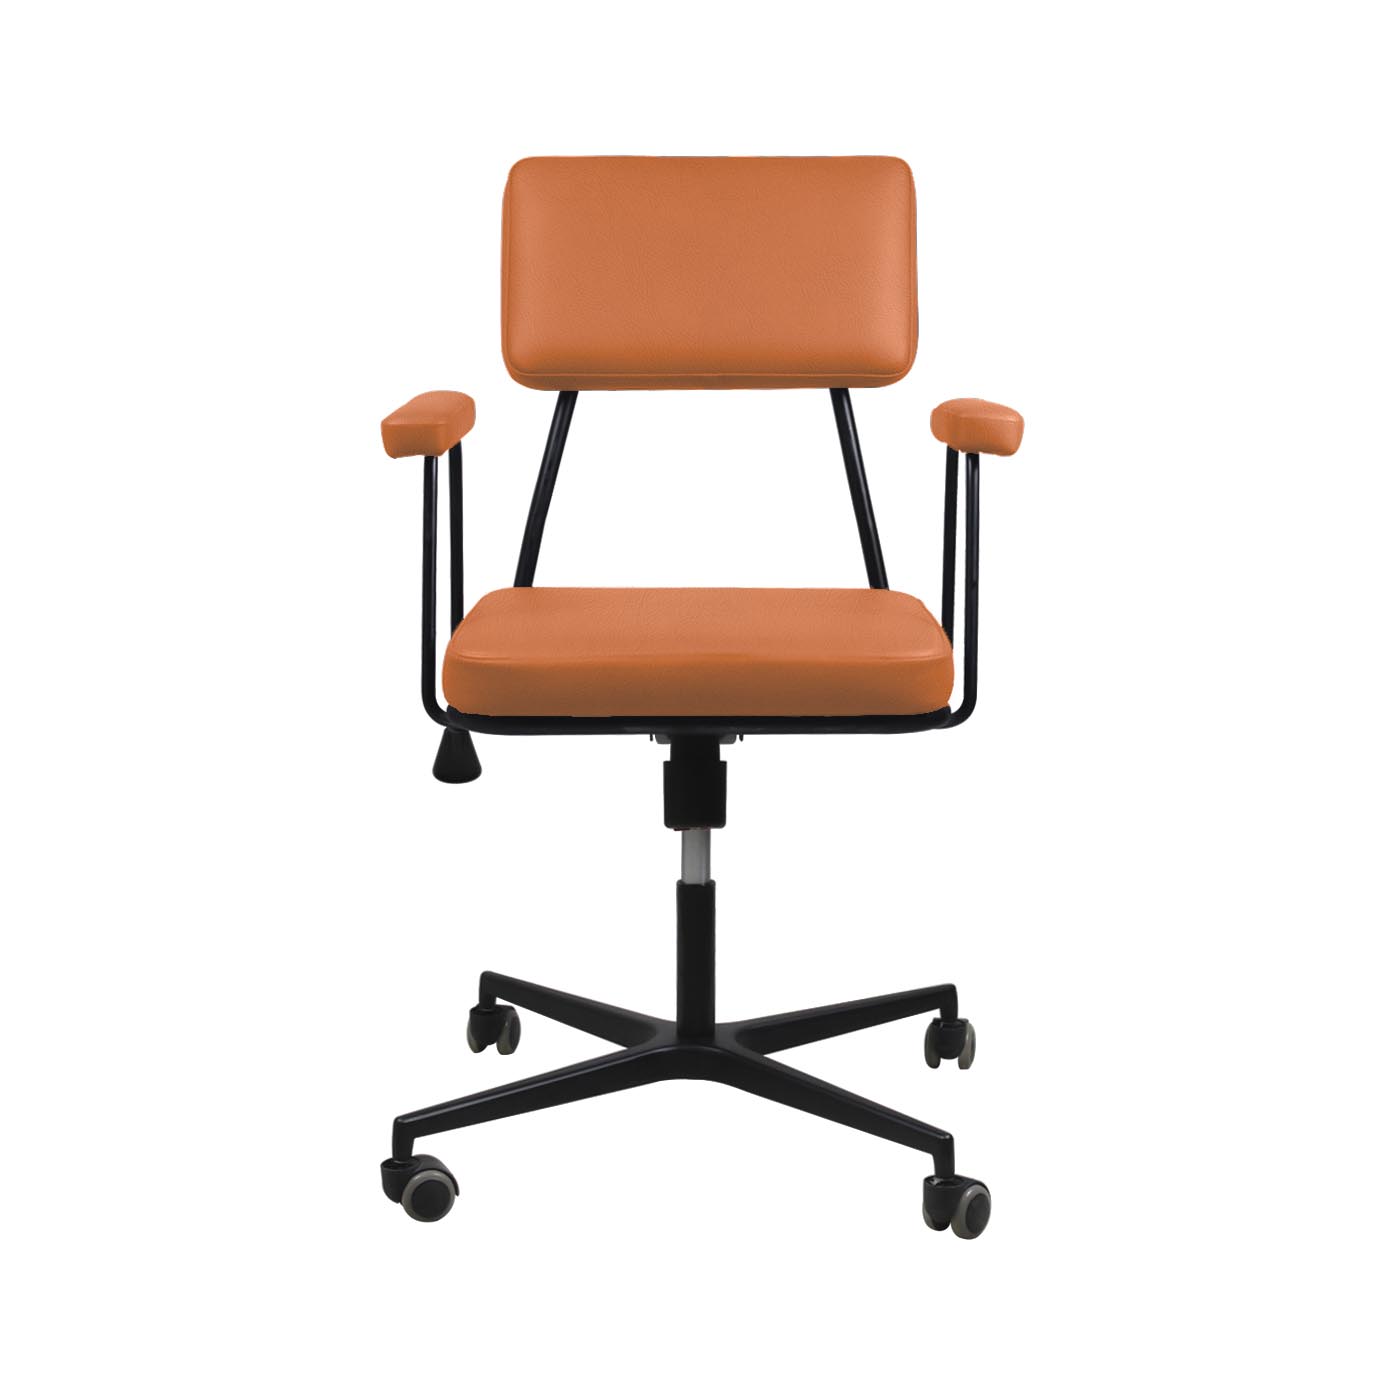 Noblitt Orange Work Chair